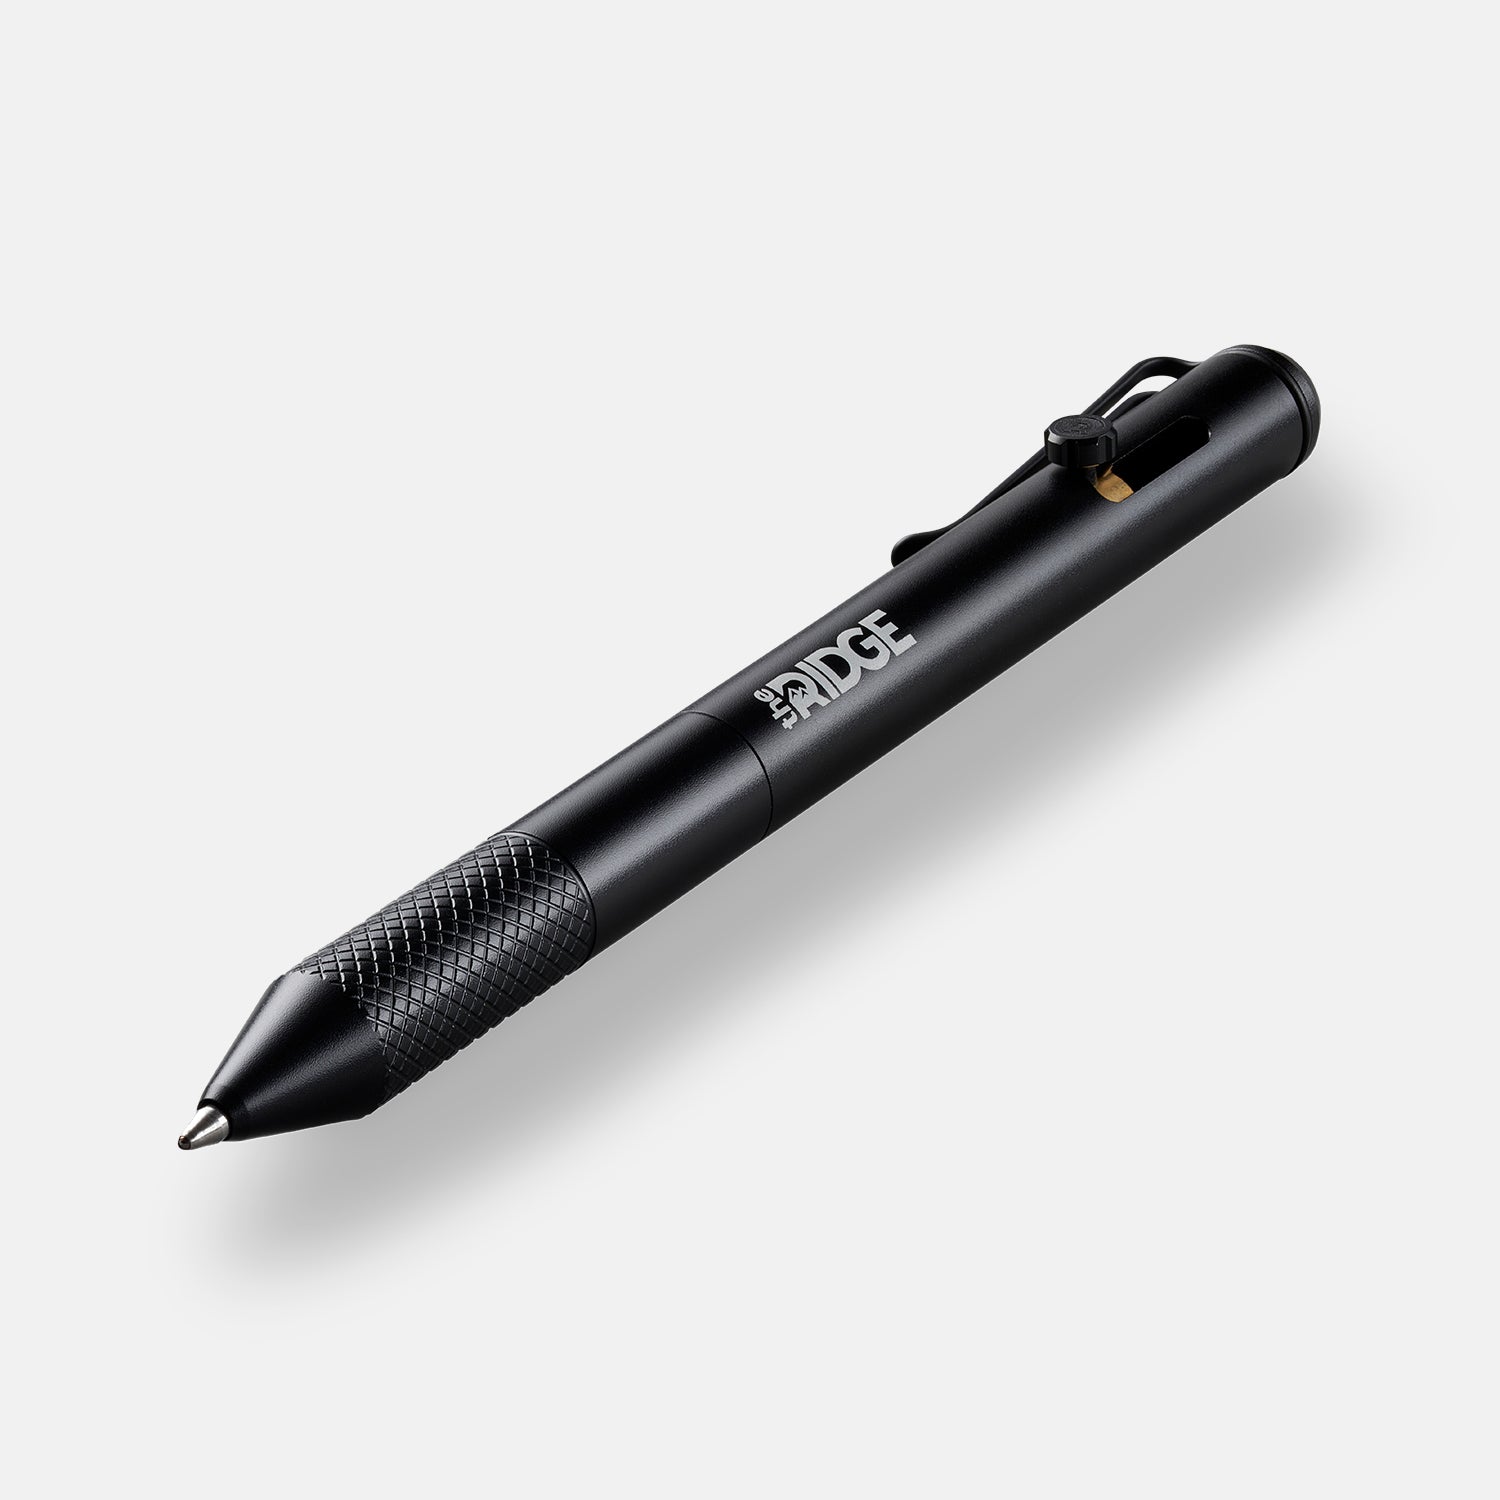 Bolt Action Pen - Black - Knurled Textured Grip // The Ridge